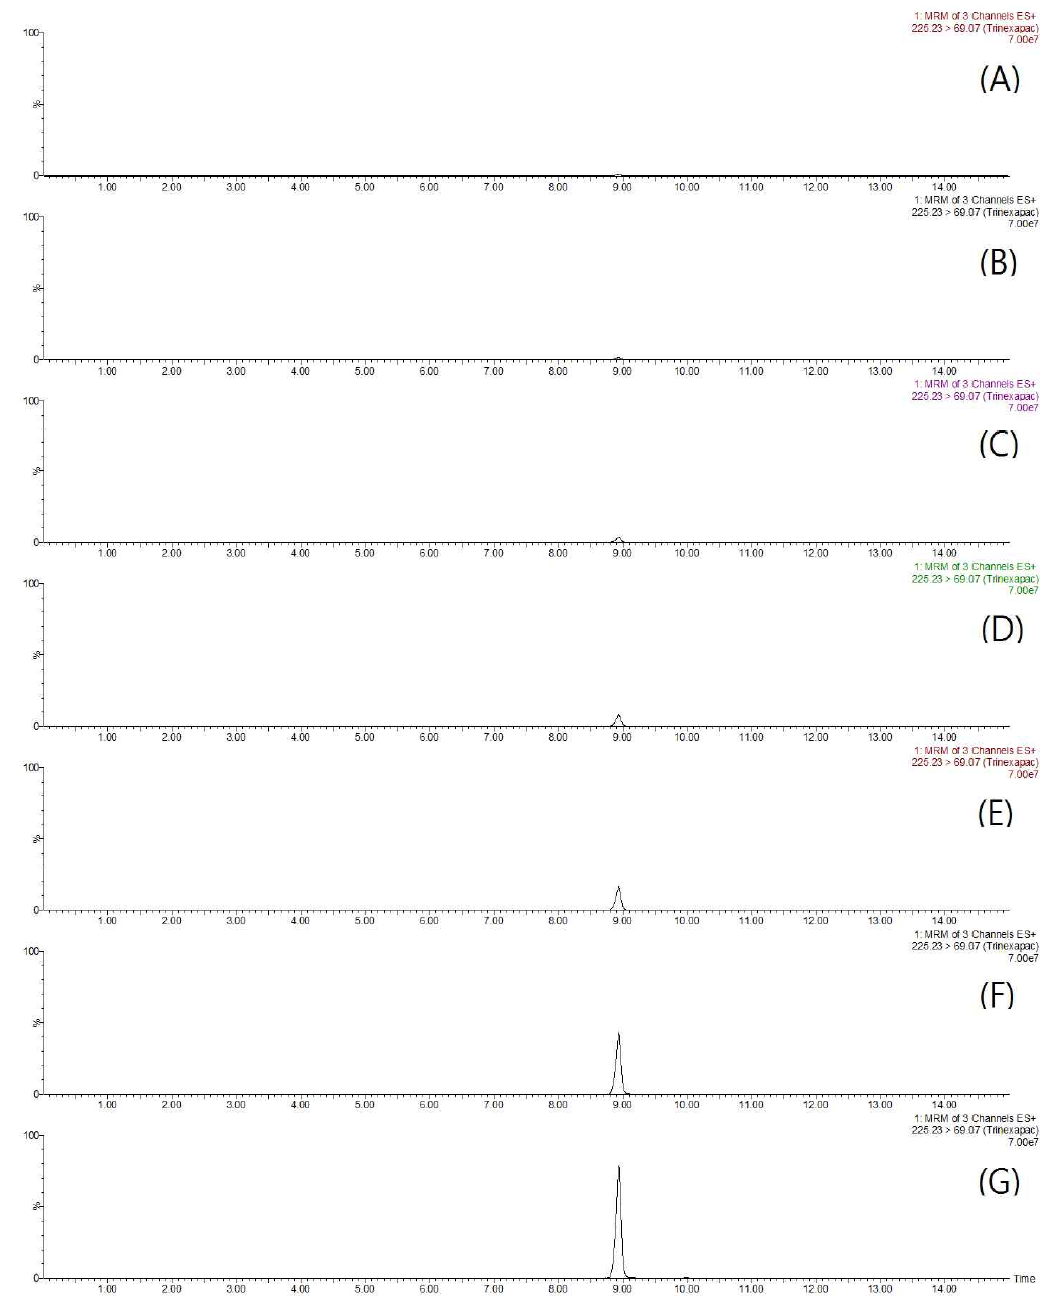 LC-MS/MS chromatograms of trinexapac standard in hulled-rice matrix (A) 0.01 mg/kg, (B) 0.02 mg/kg, (C) 0.05 mg/kg, (D) 0.1 mg/kg, (E) 0.2 mg/kg, (F) 0.5 mg/kg, and (G) 1 mg/kg